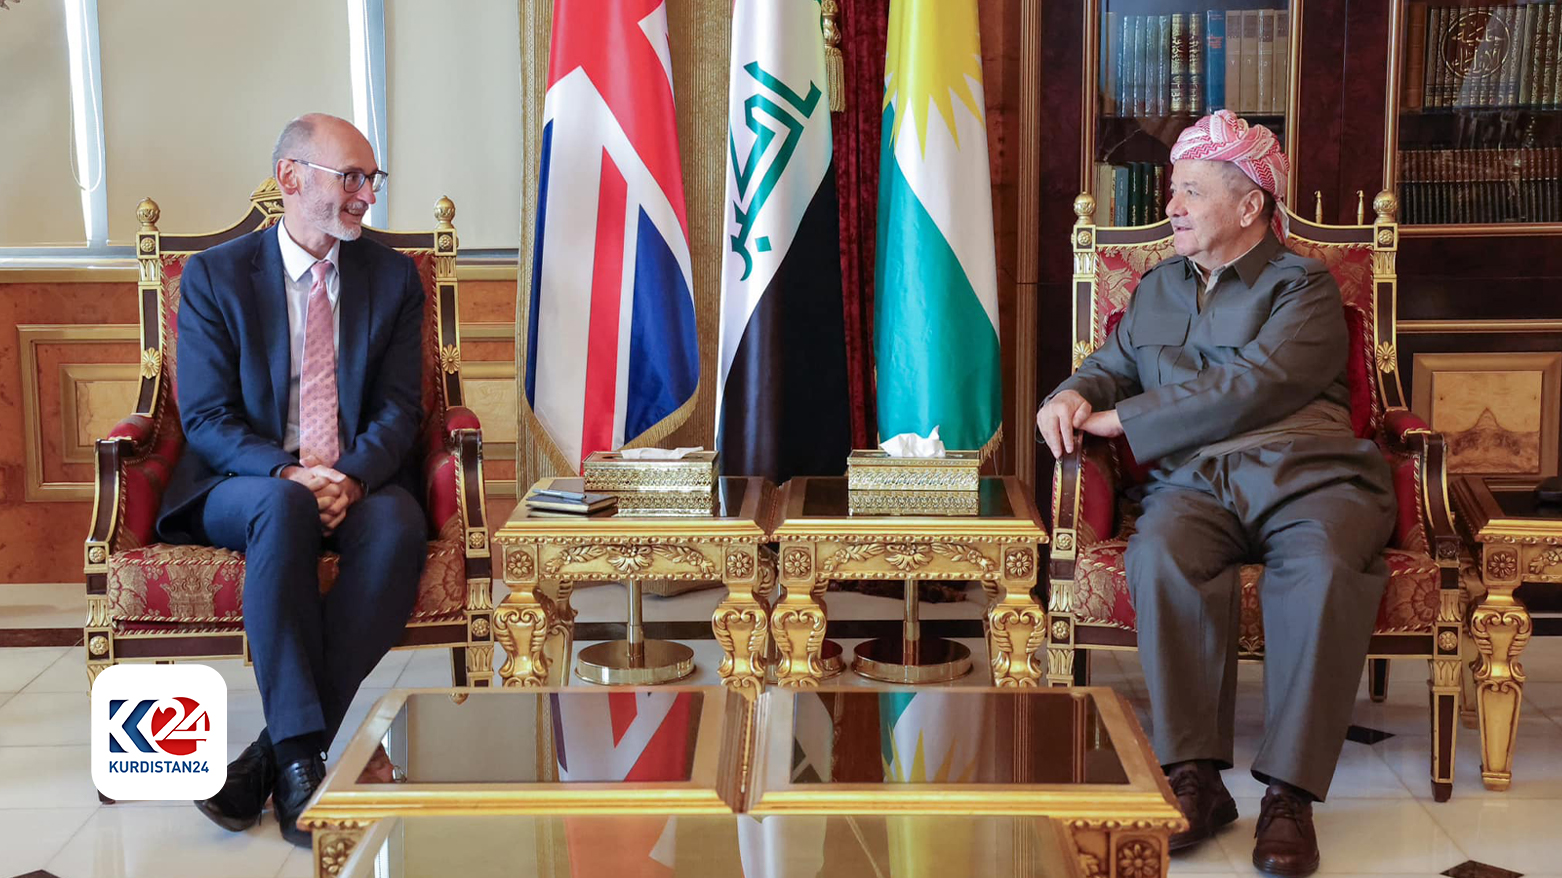 KDP President Masoud Barzani British envoy to Iraq discuss parliamentary elections